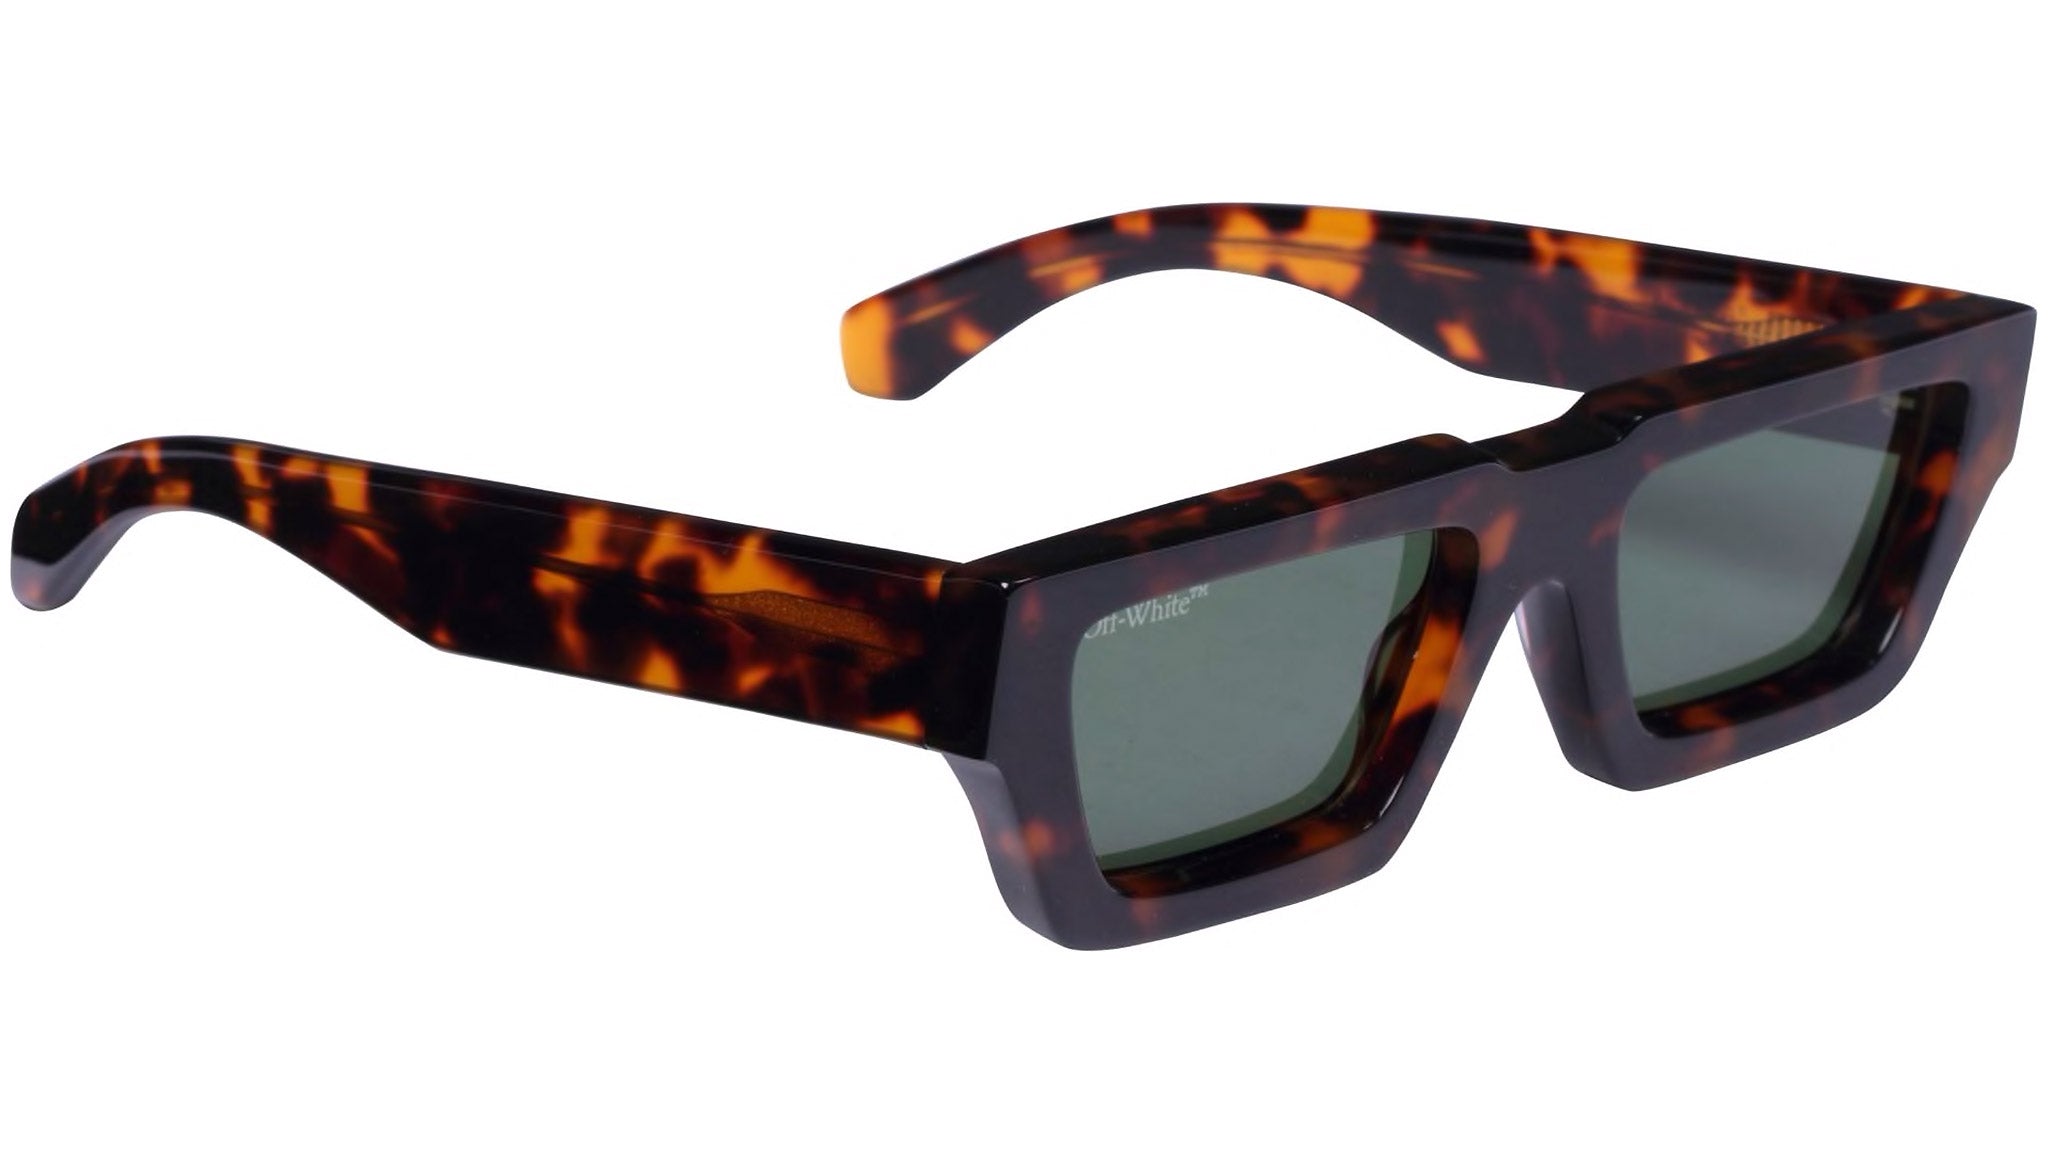 Off-White - Manchester Sunglasses